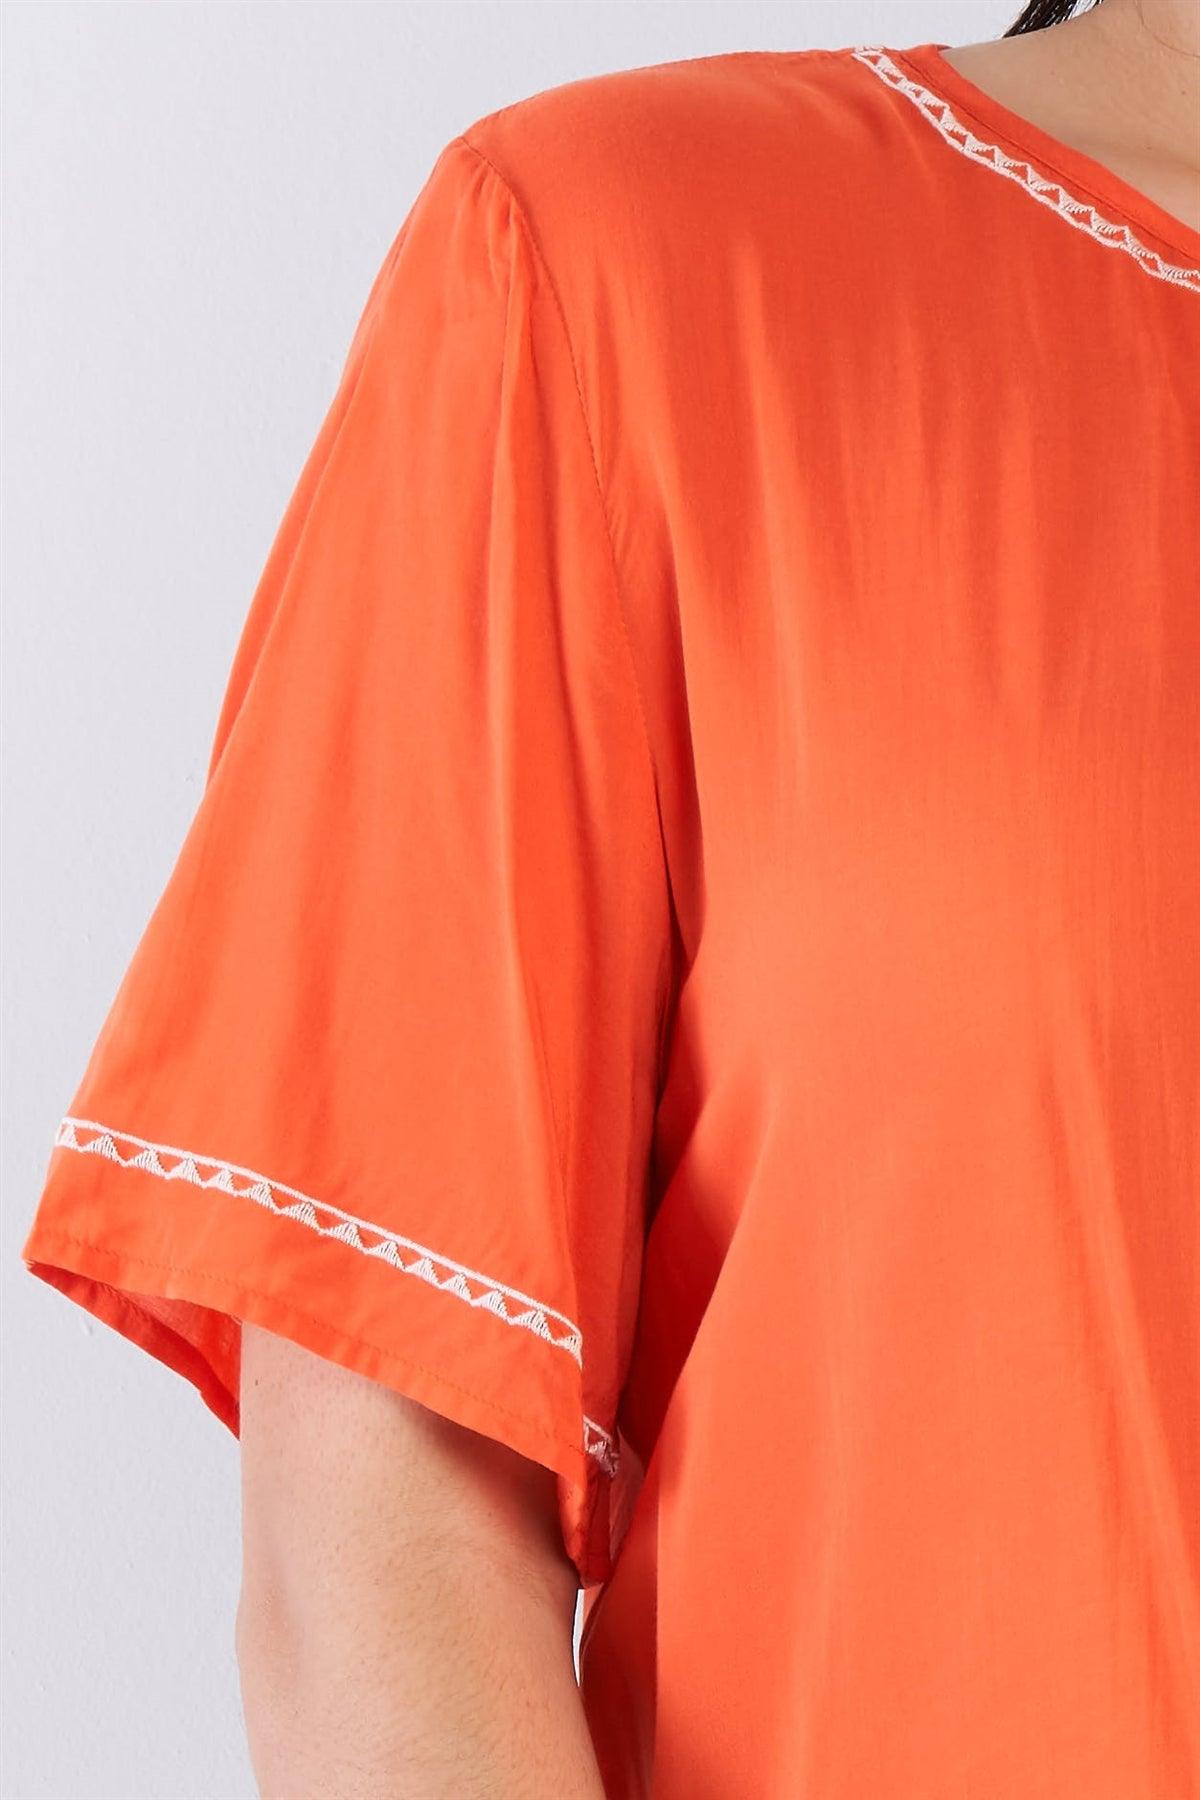 Junior Plus Size Tangerine Orange Embroidered Hem Short Sleeve Top /1-1-2